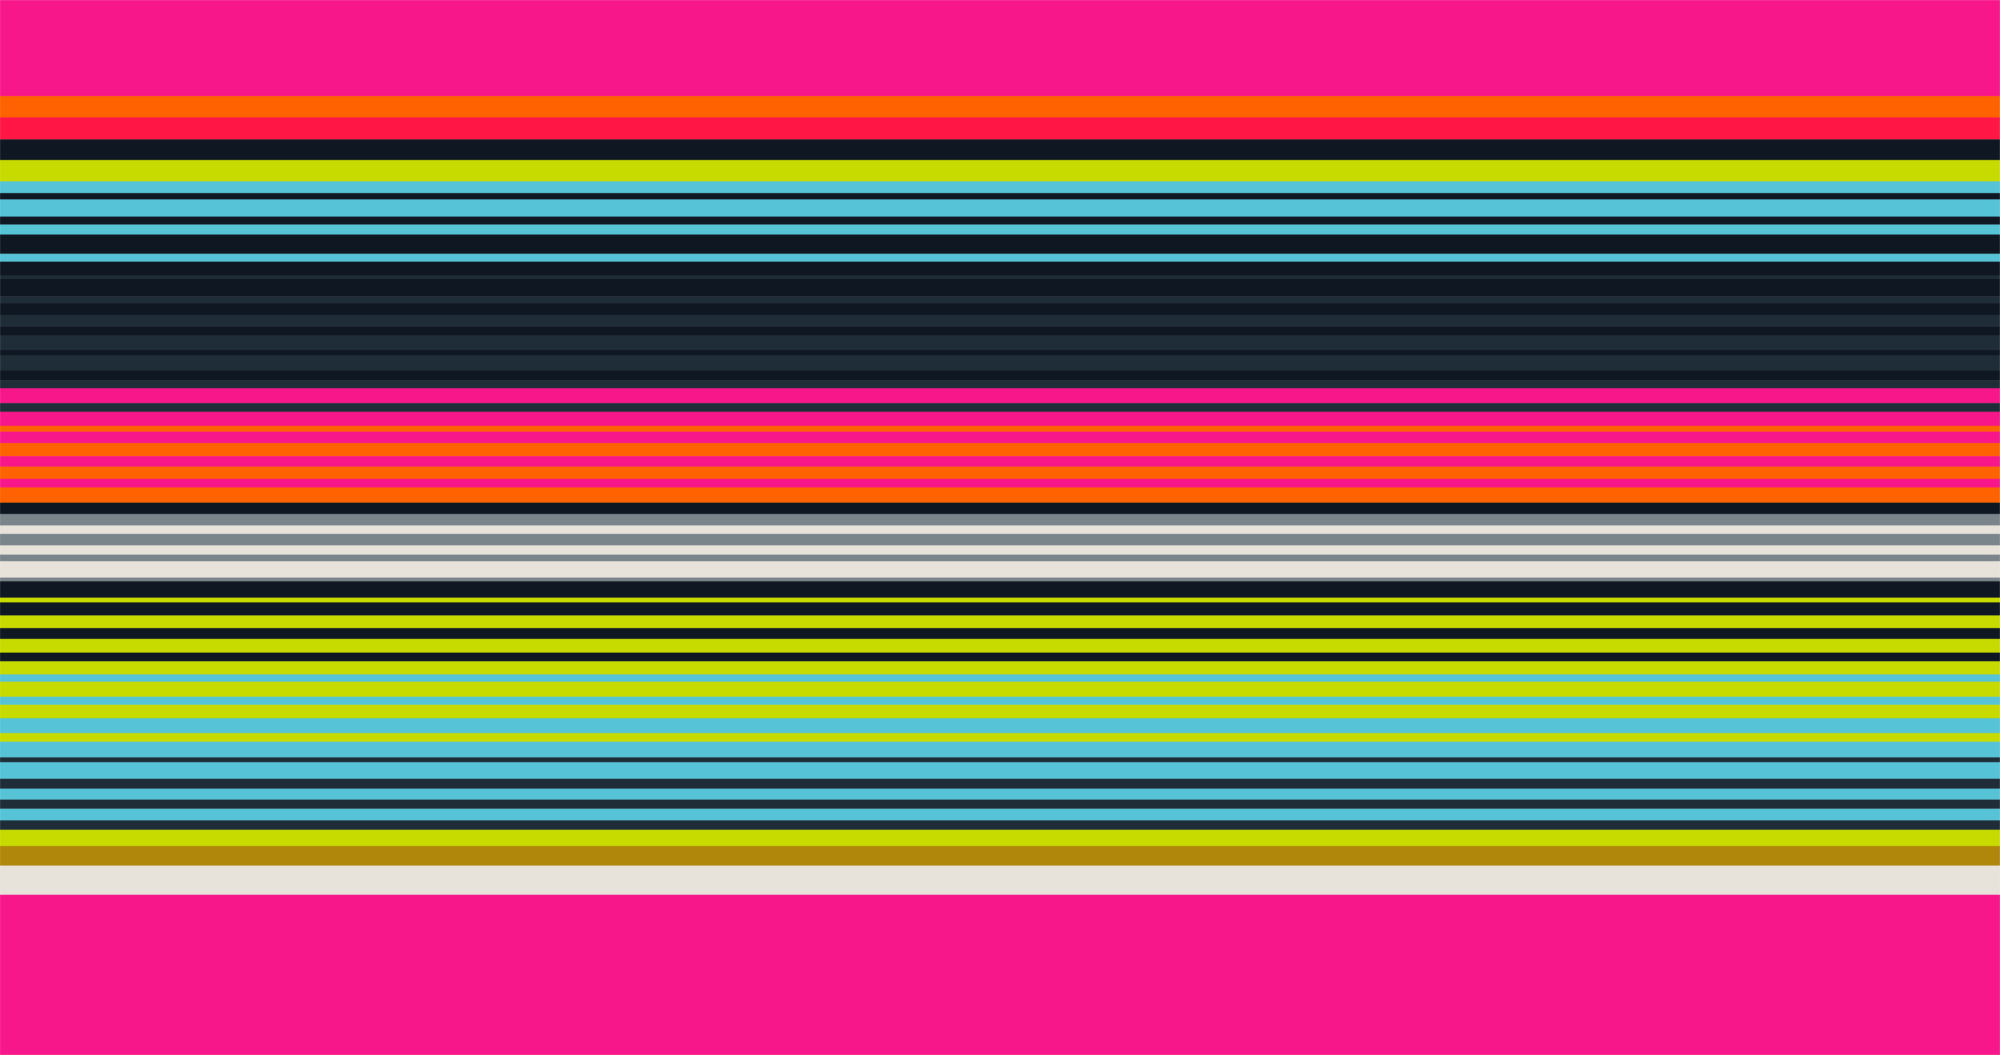 PURALIMA stripes pattern